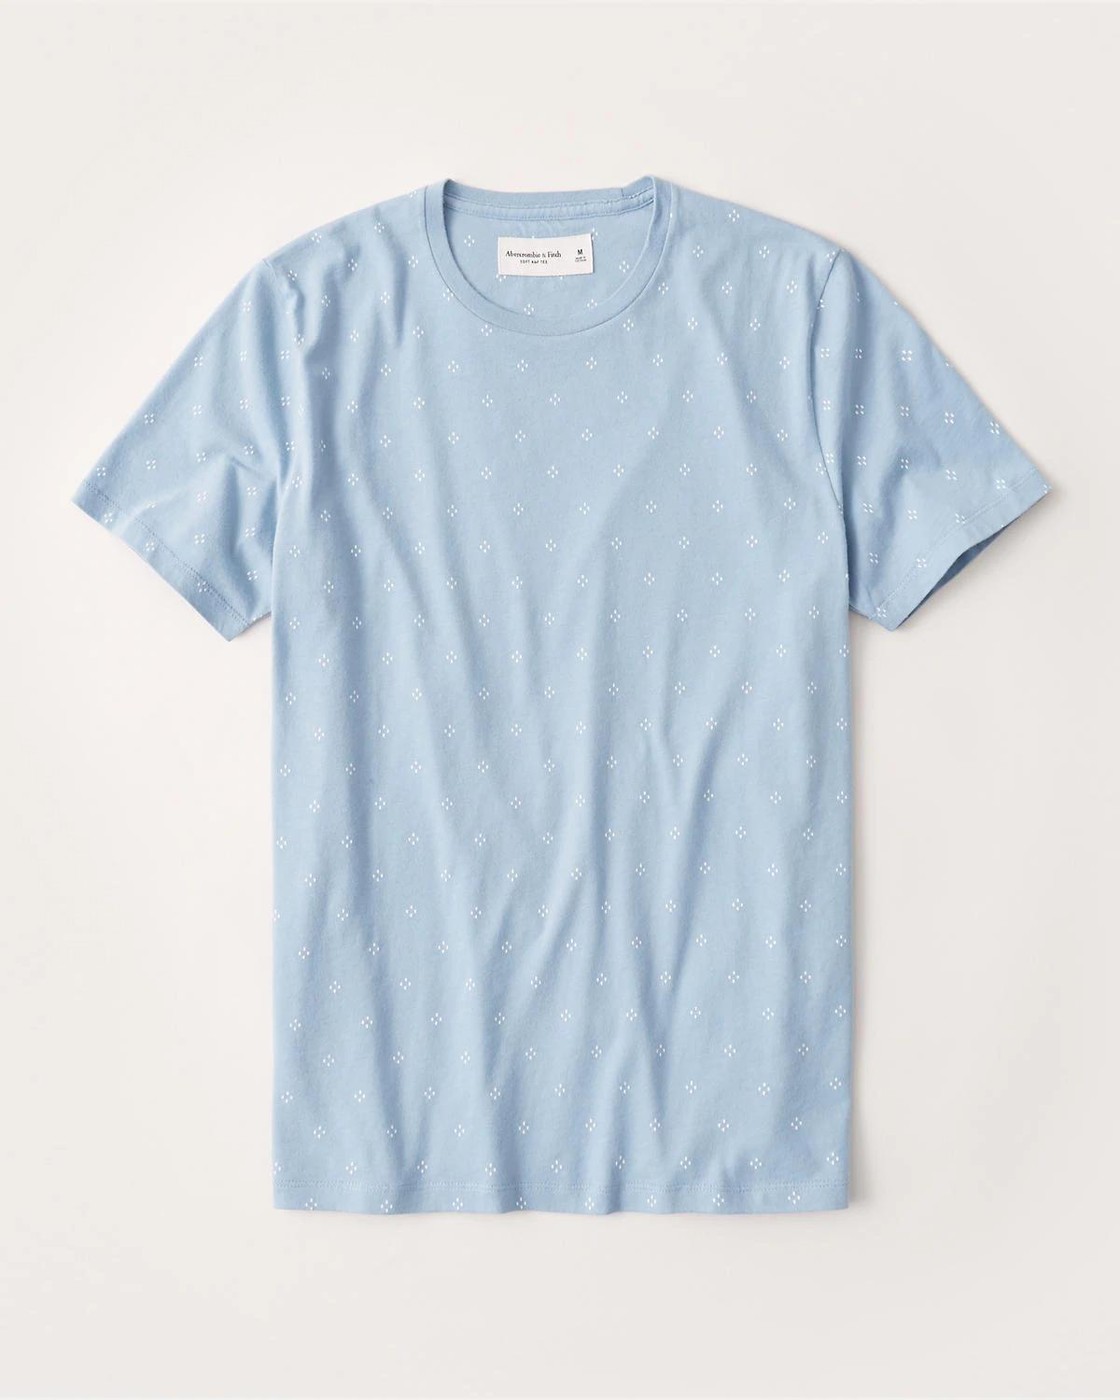 Голубая футболка - мужская футболка Abercrombie & Fitch, XL, XL